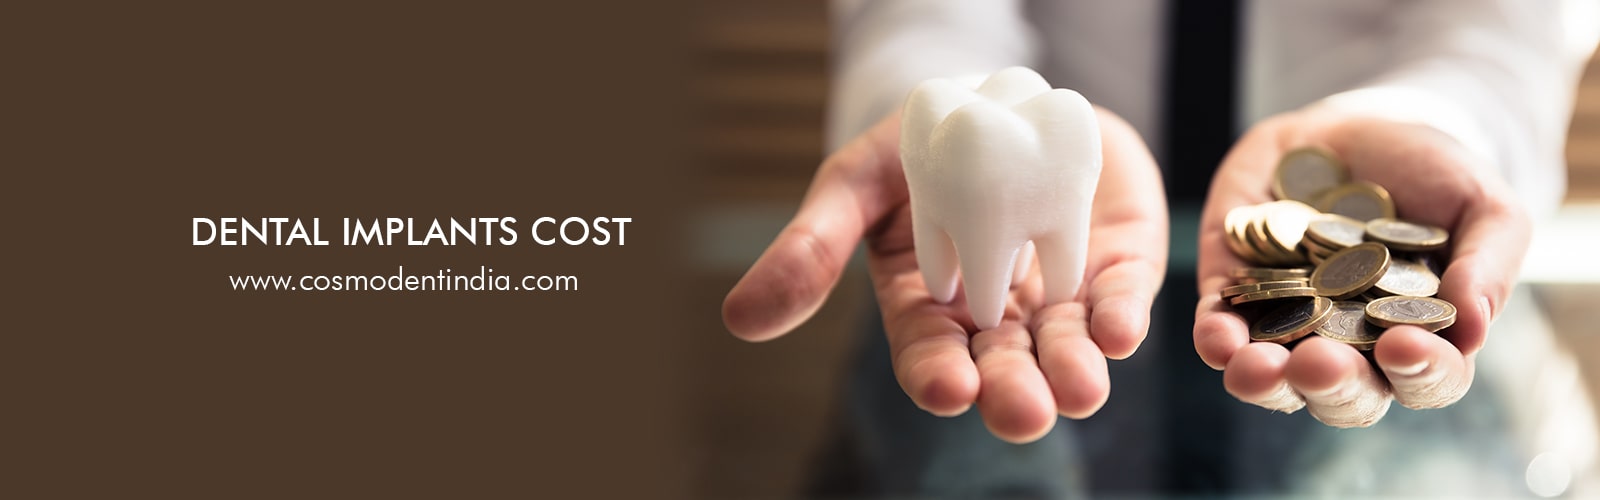 implantes dentales-costo